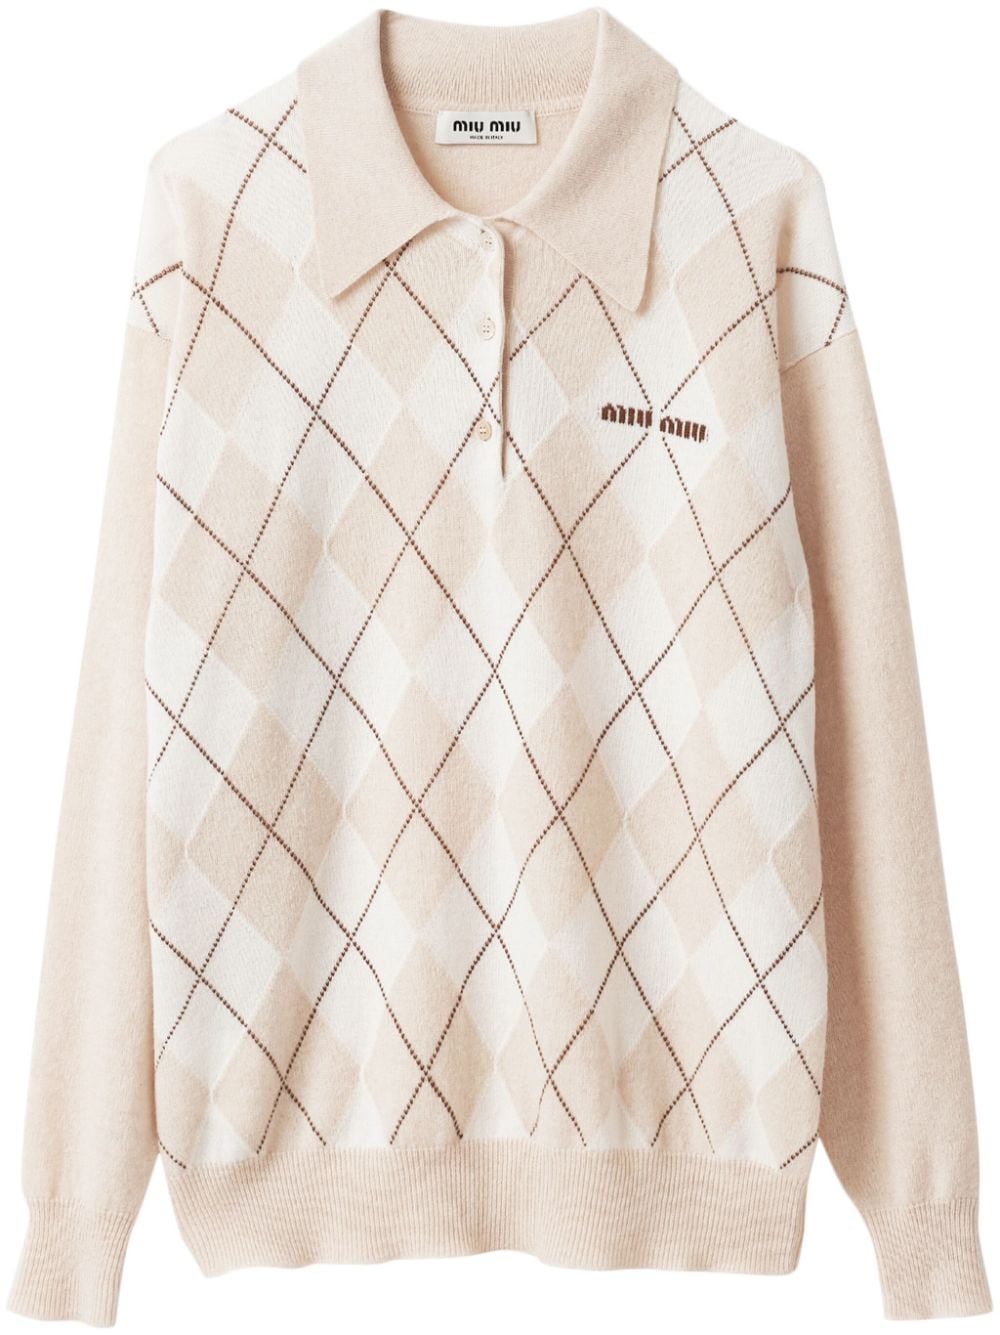 Image 1 of Miu Miu argyle-pattern cashmere jumper